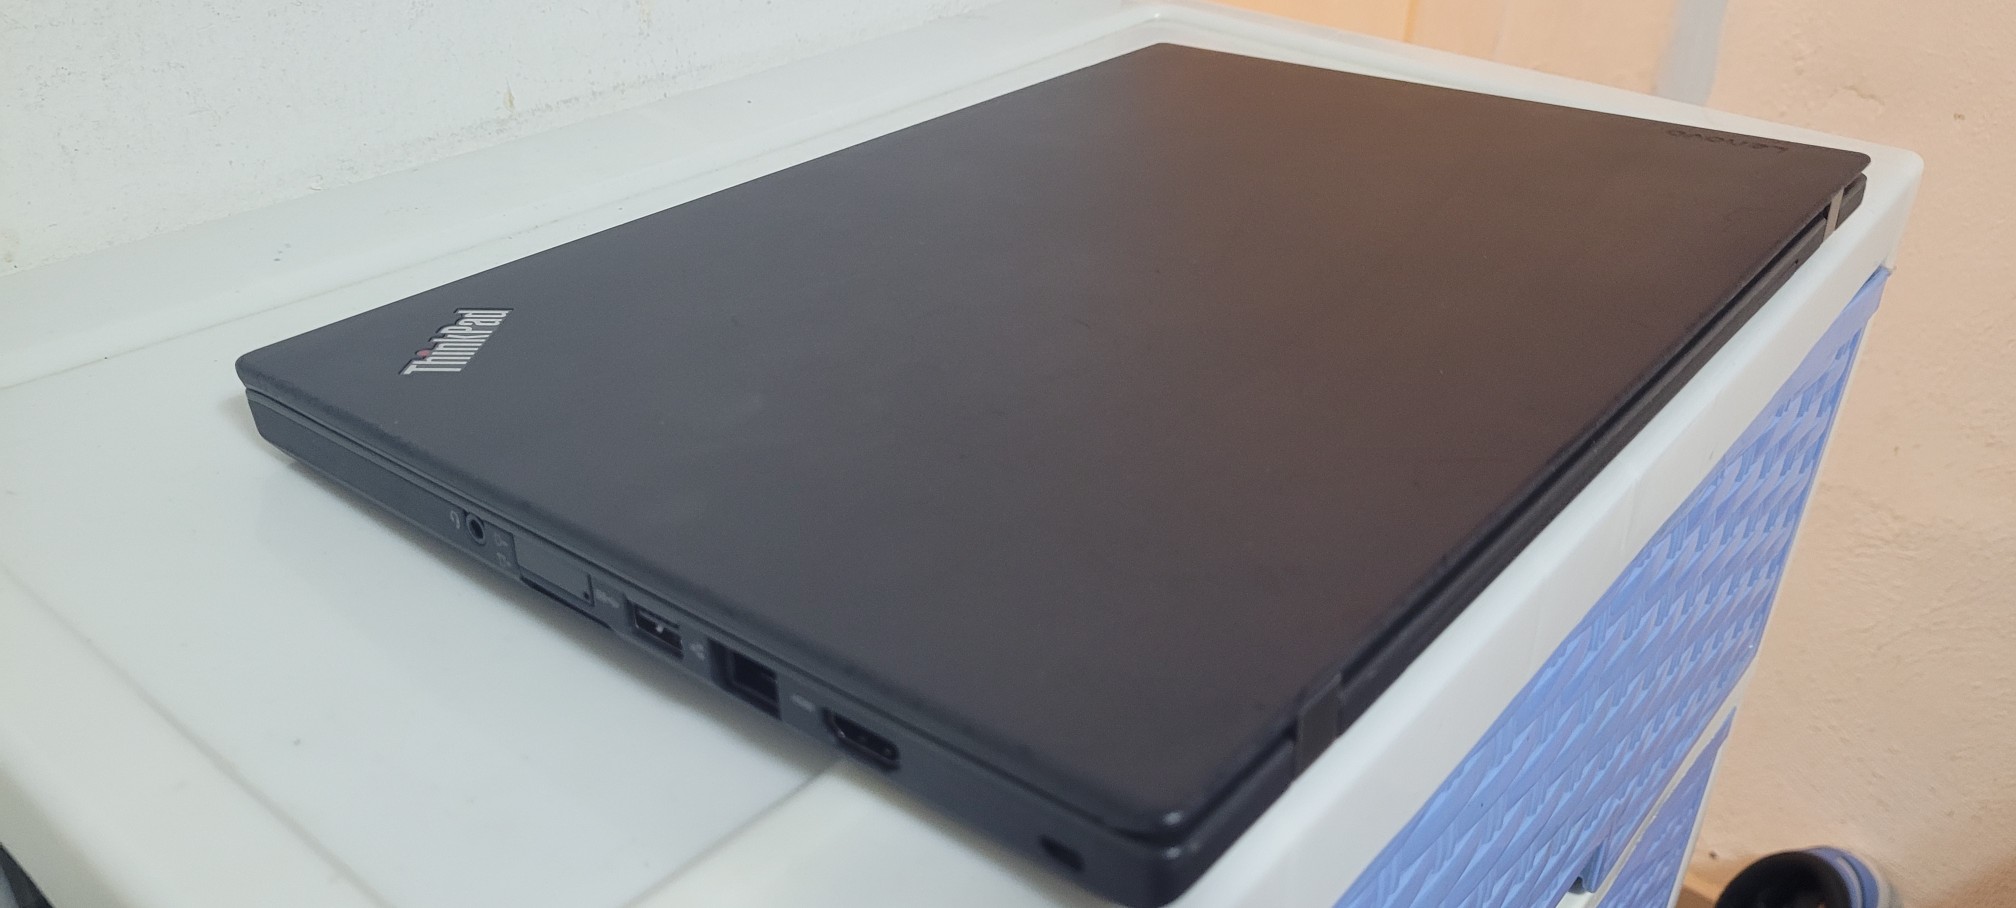 computadoras y laptops - Lenovo thinKpad T460 14 Pulg Core i5 6ta Ram 8gb DDR4 Disco SSD 256GB WIFI 2